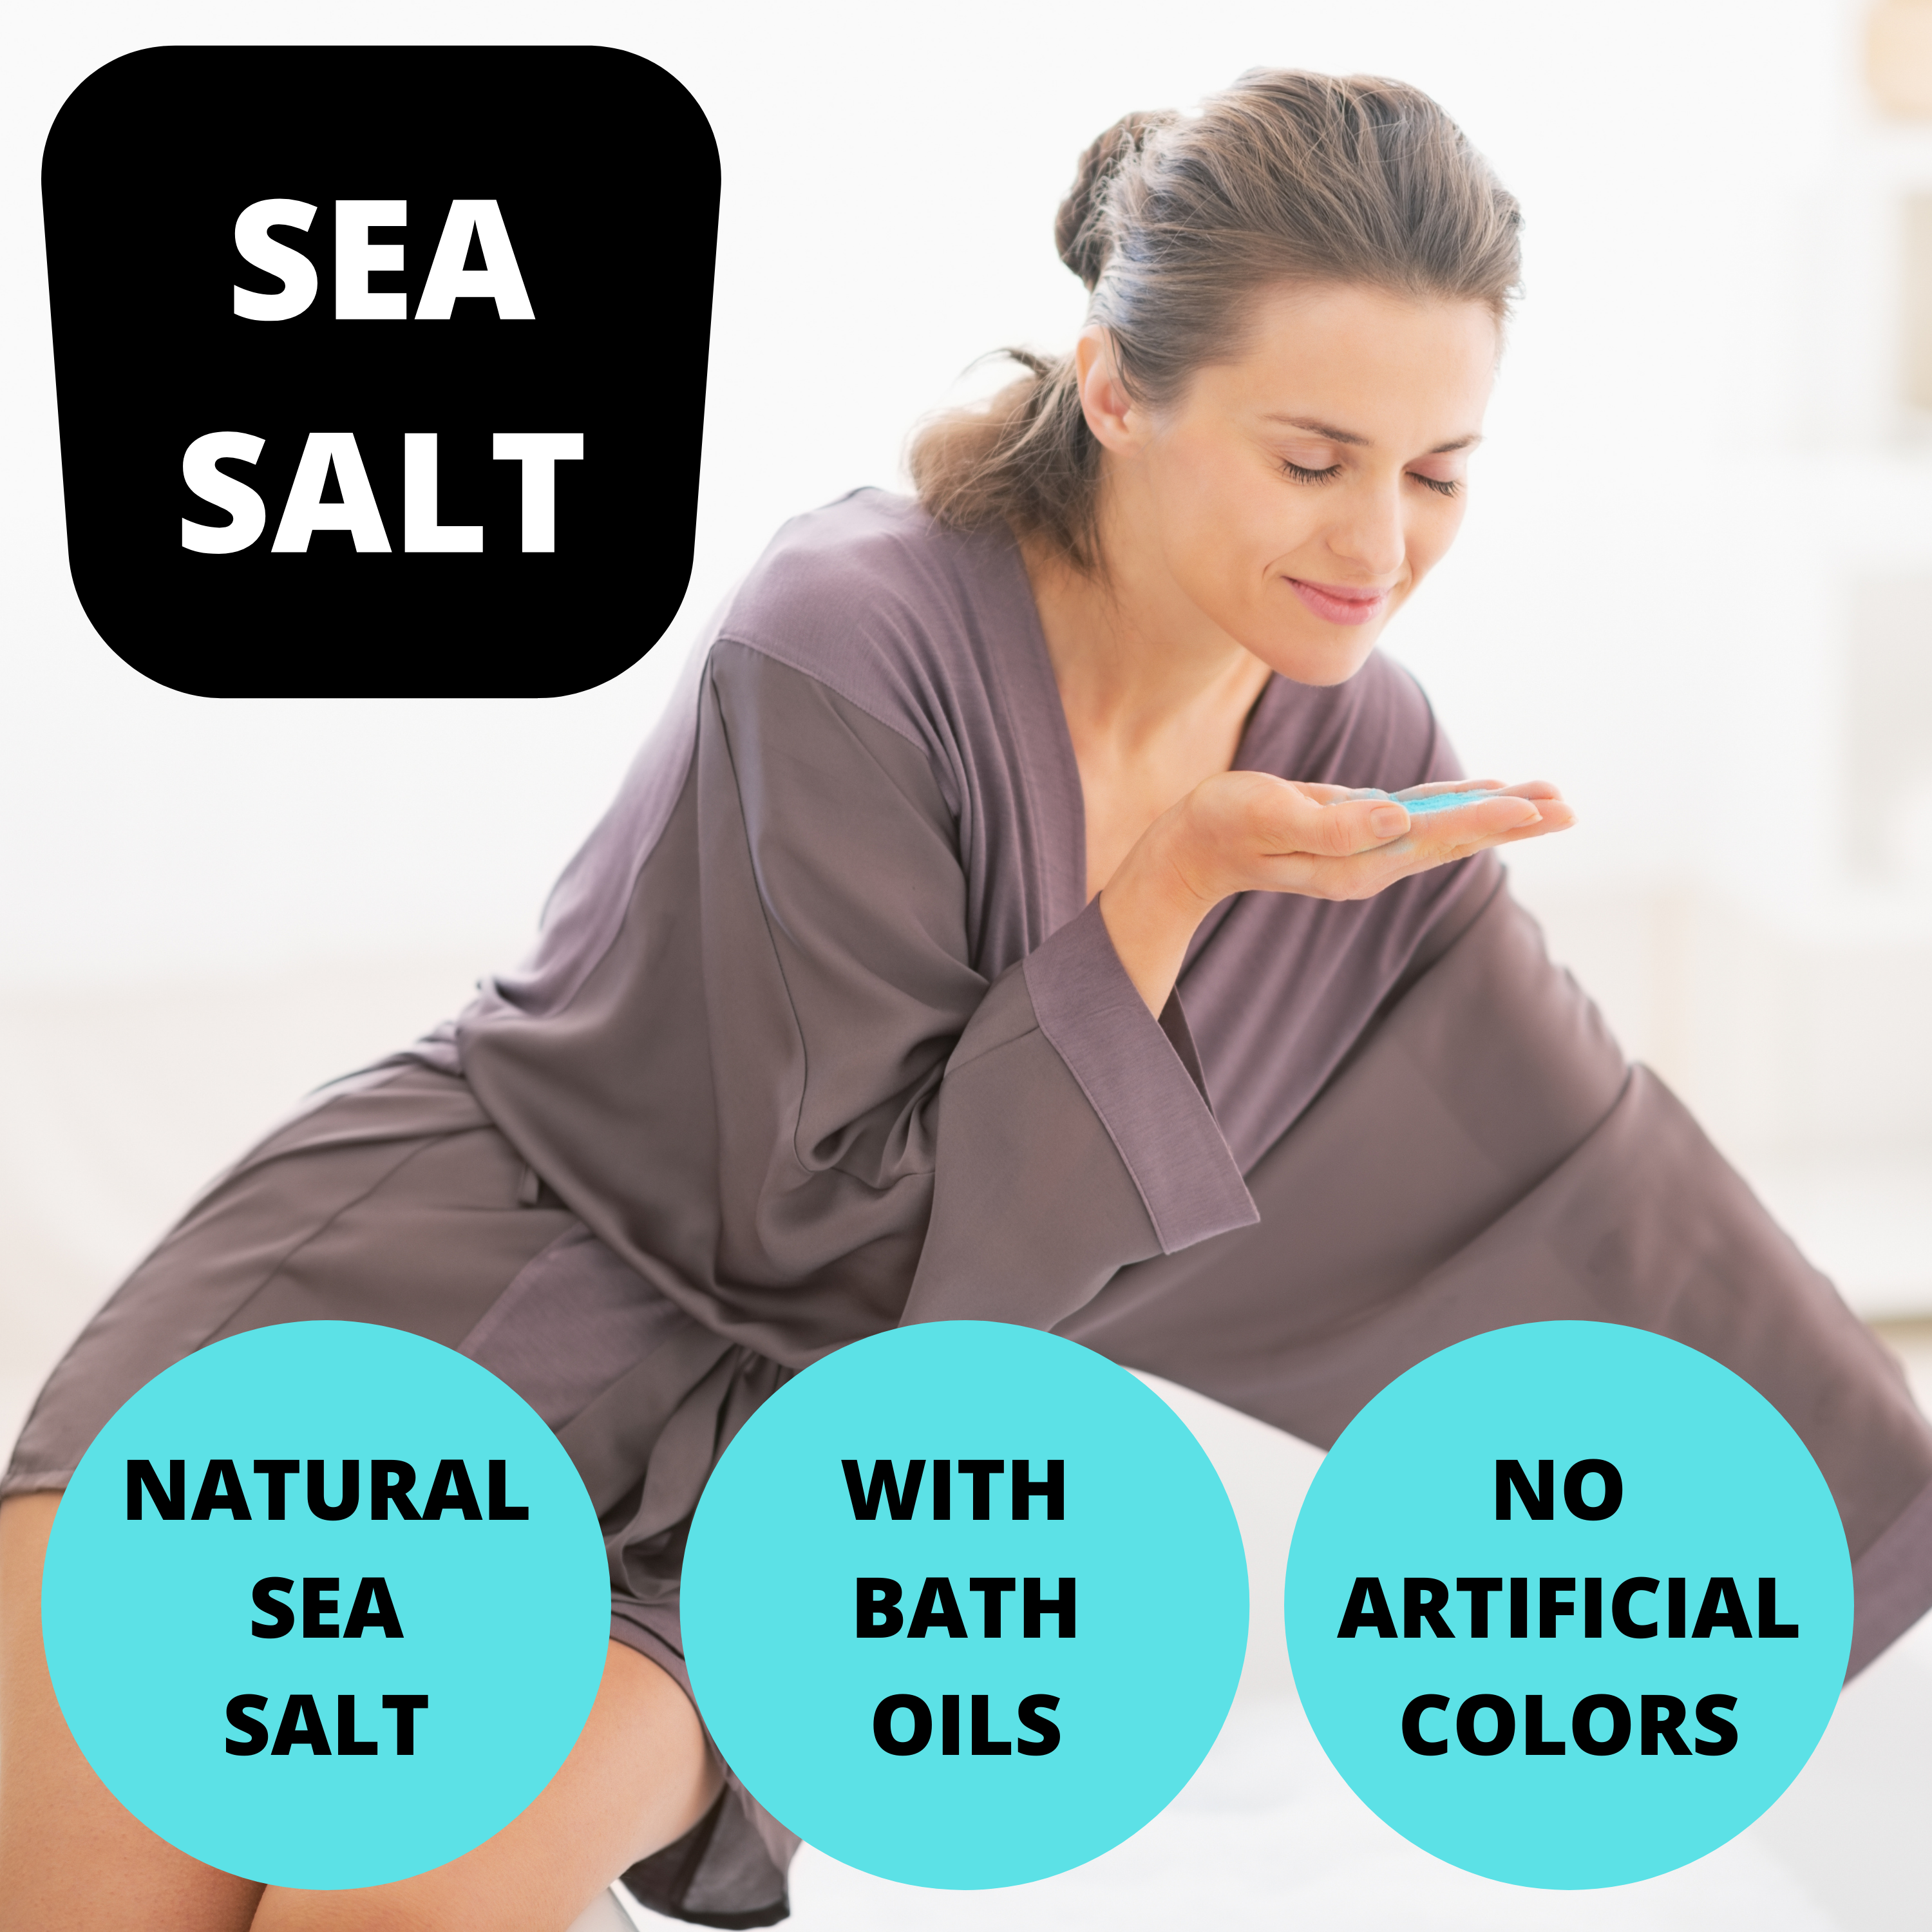 Black Canyon Jasmine Vanilla Musk Scented Sea Salt Bath Soak